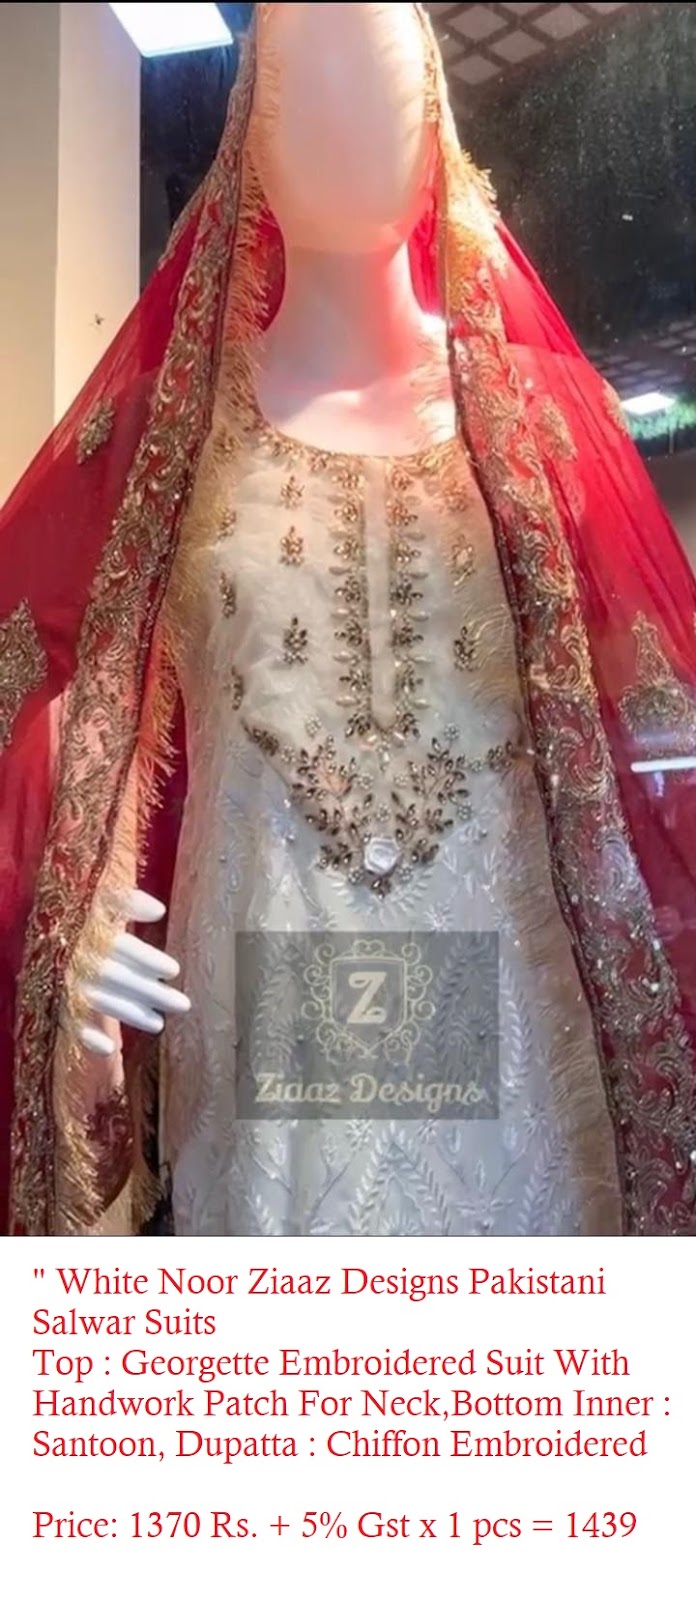 Ziaaz Designs White Noor Pakistani Suits Catalog Lowest Price